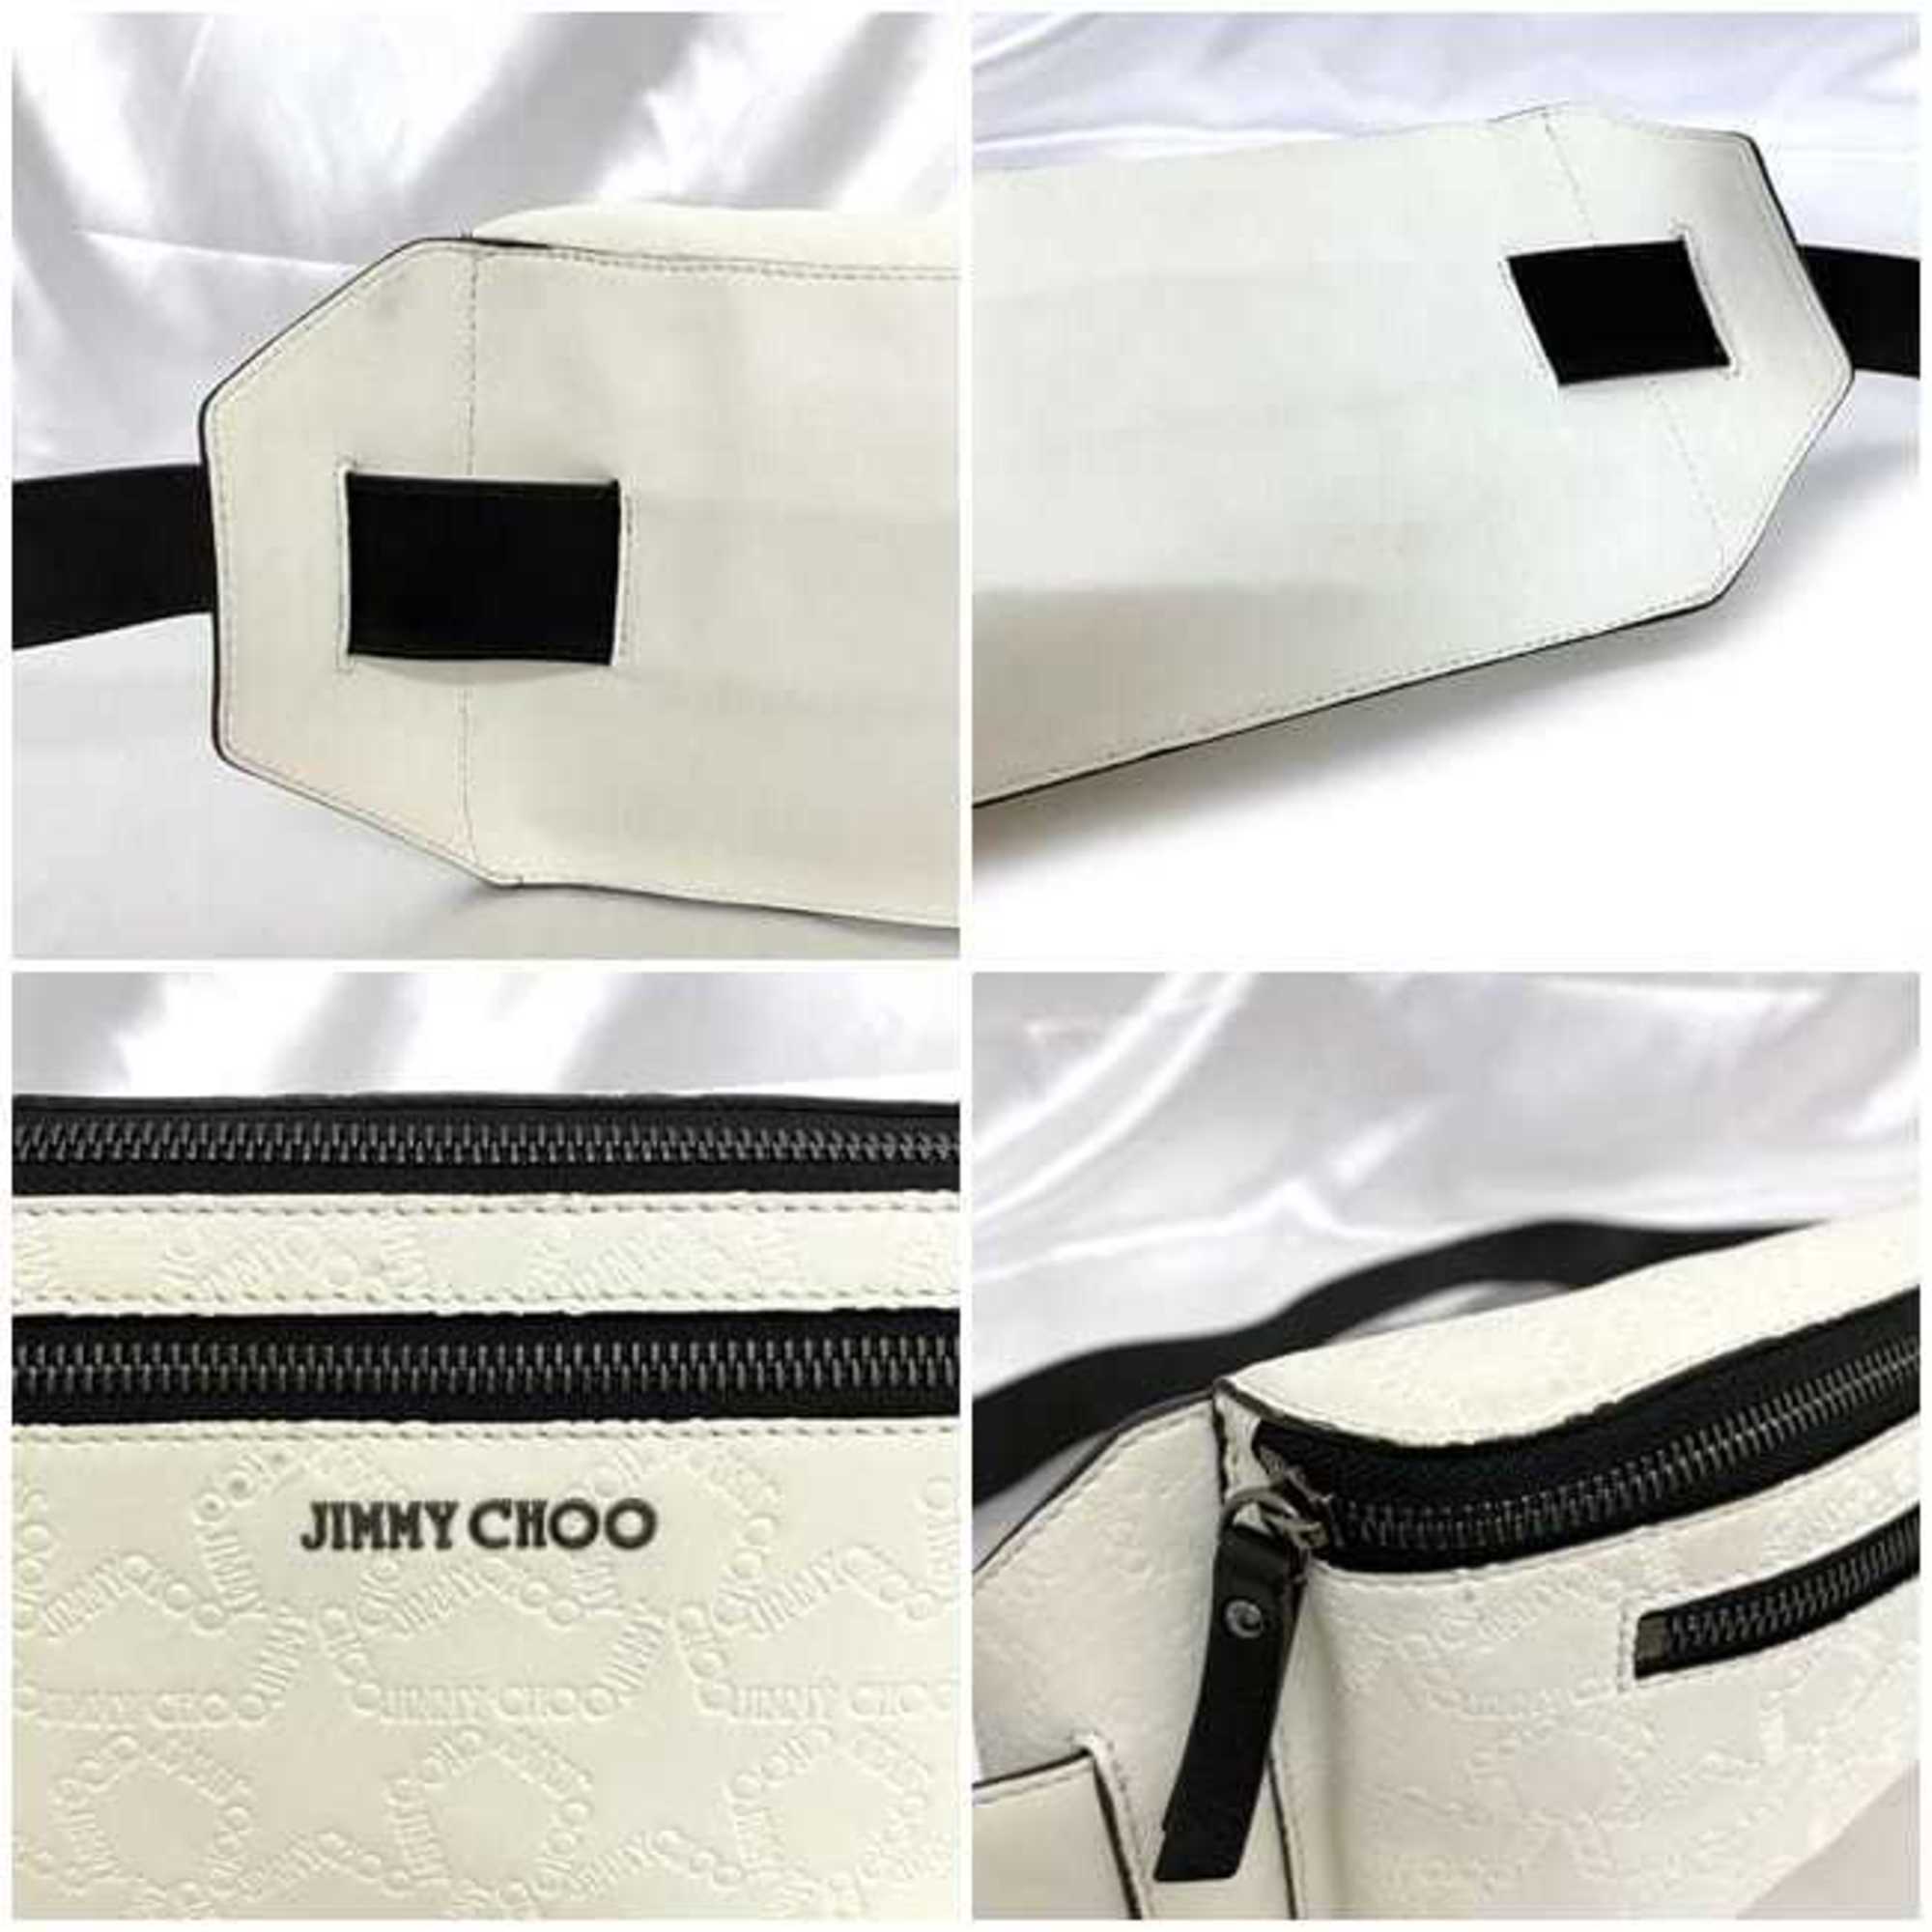 Jimmy Choo body bag white black ec-20583 star leather JIMMY CHOO waist belt crossbody pattern compact ladies